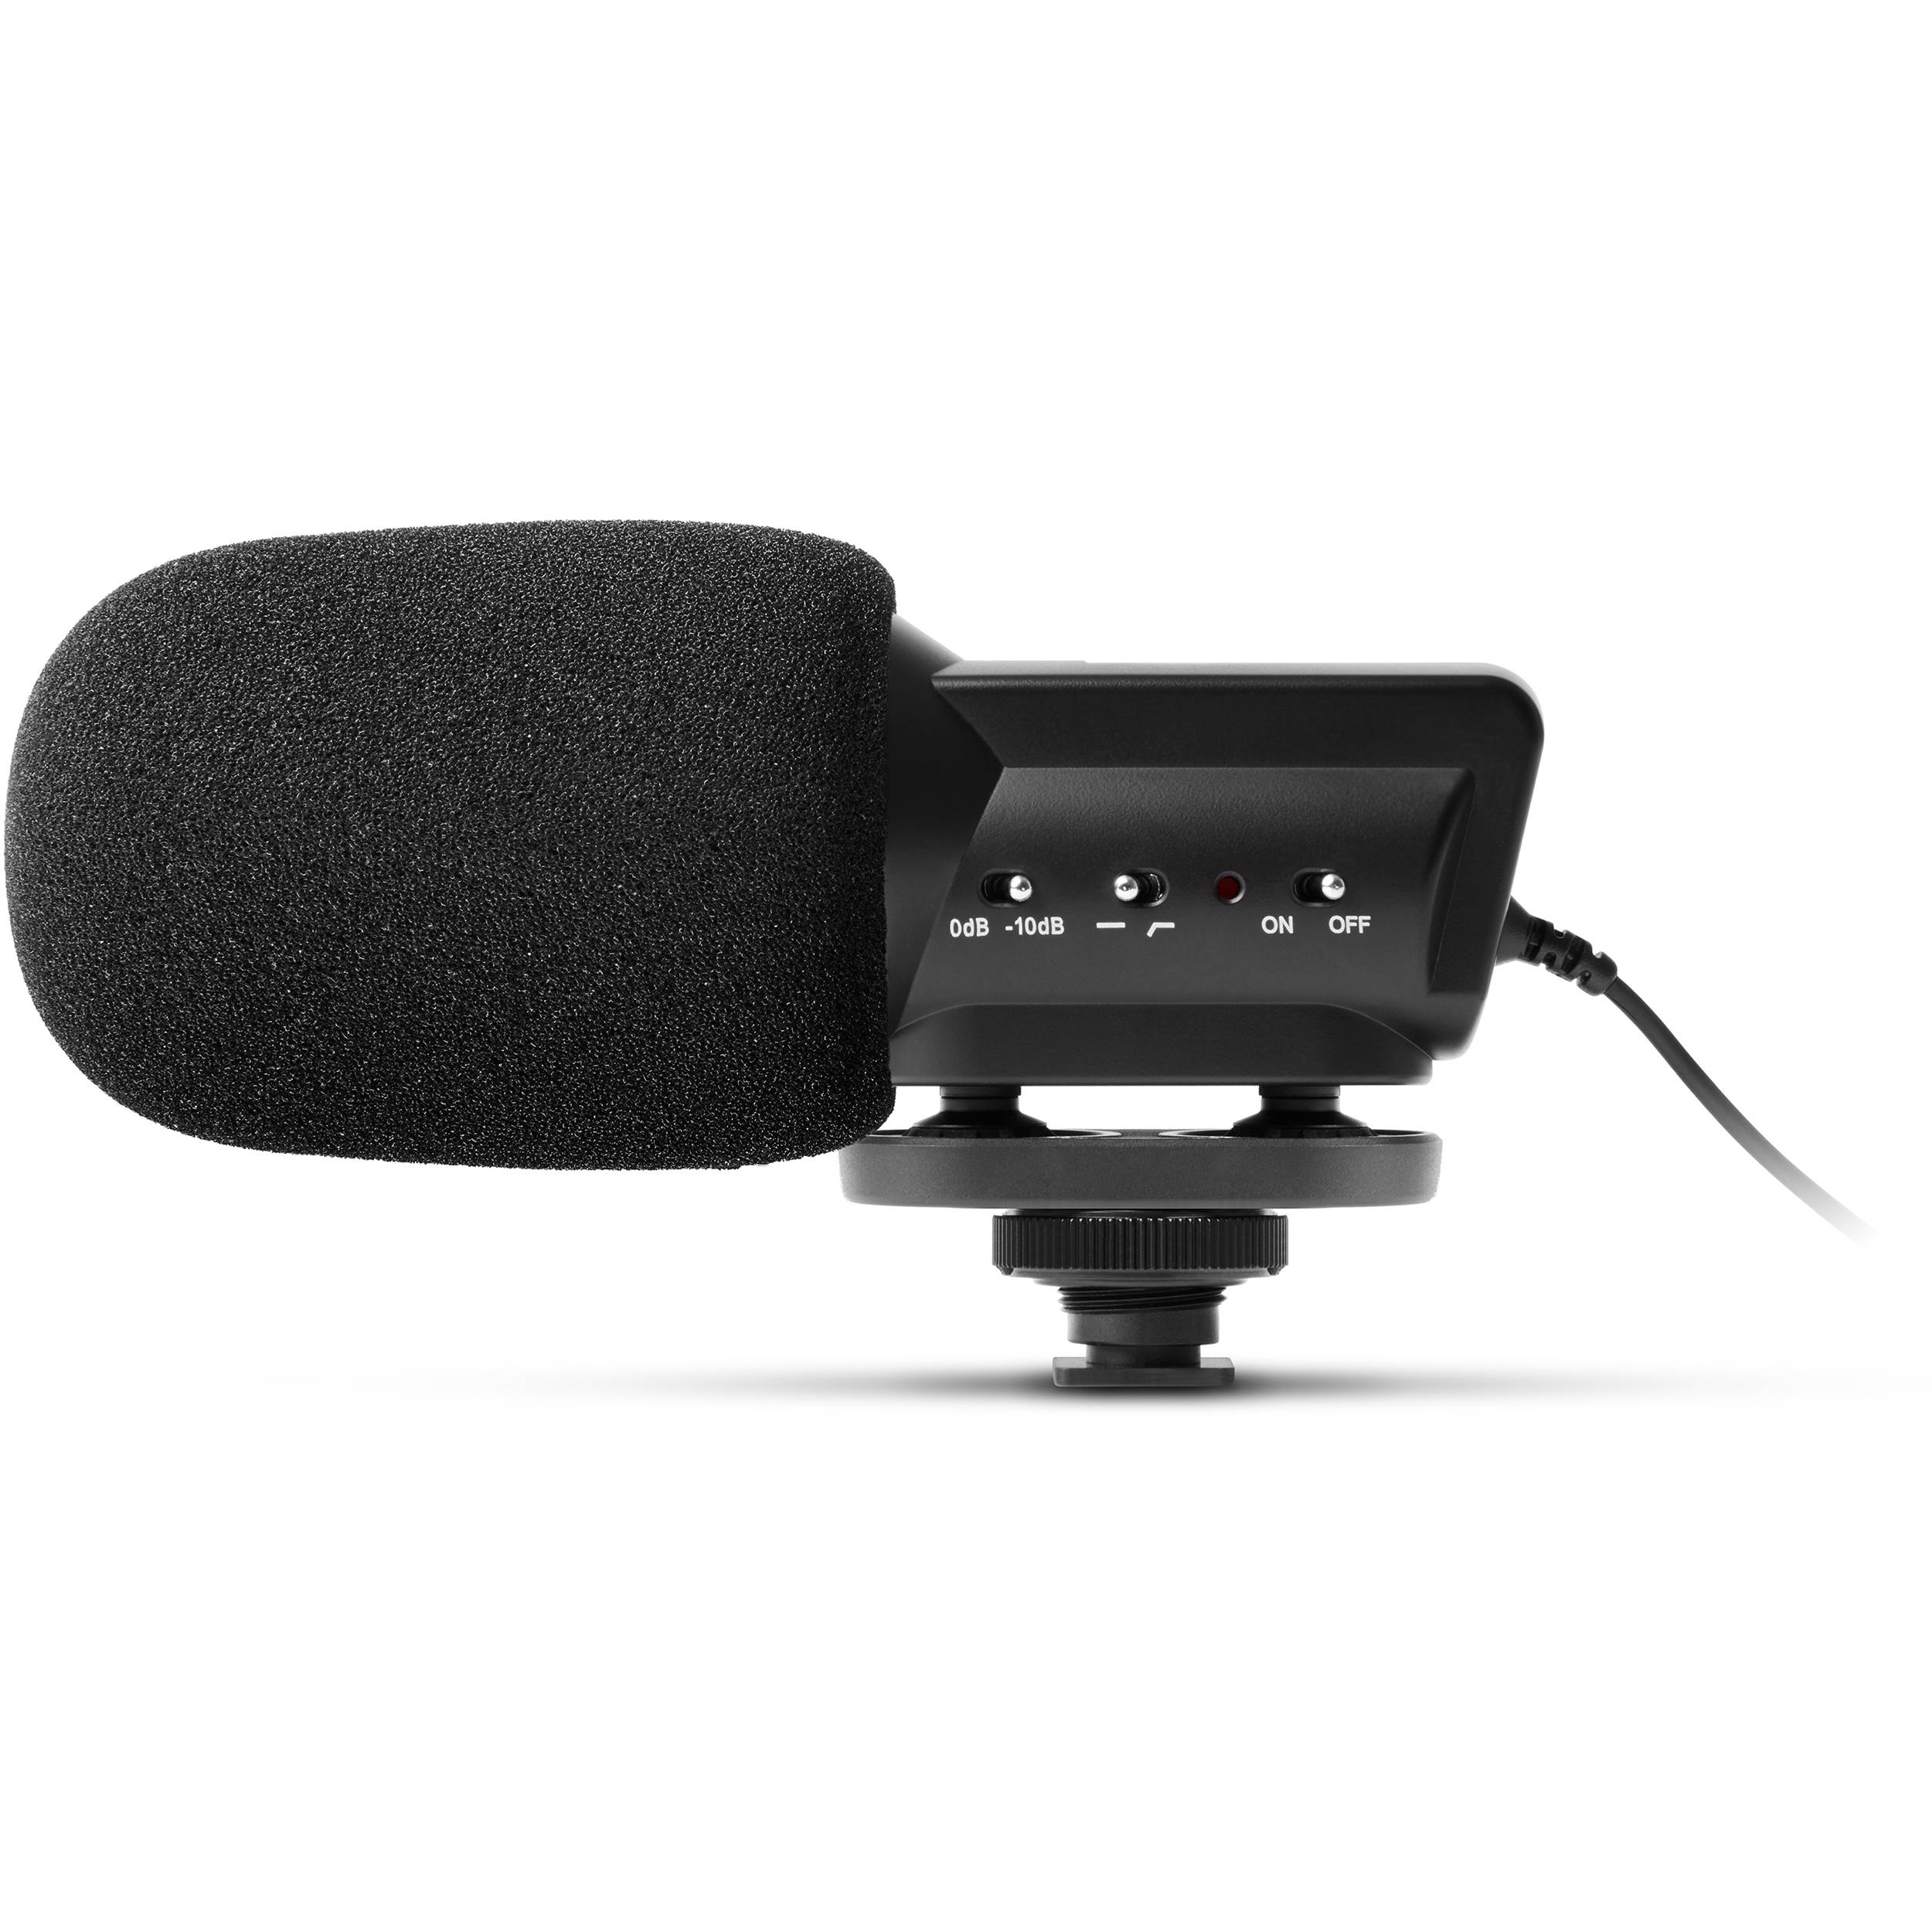 Marantz Professional Audio Scope SB-C2 X/Y Stereo Condenser Microphone for DSLR Cameras (50 Hz - 18 kHz)